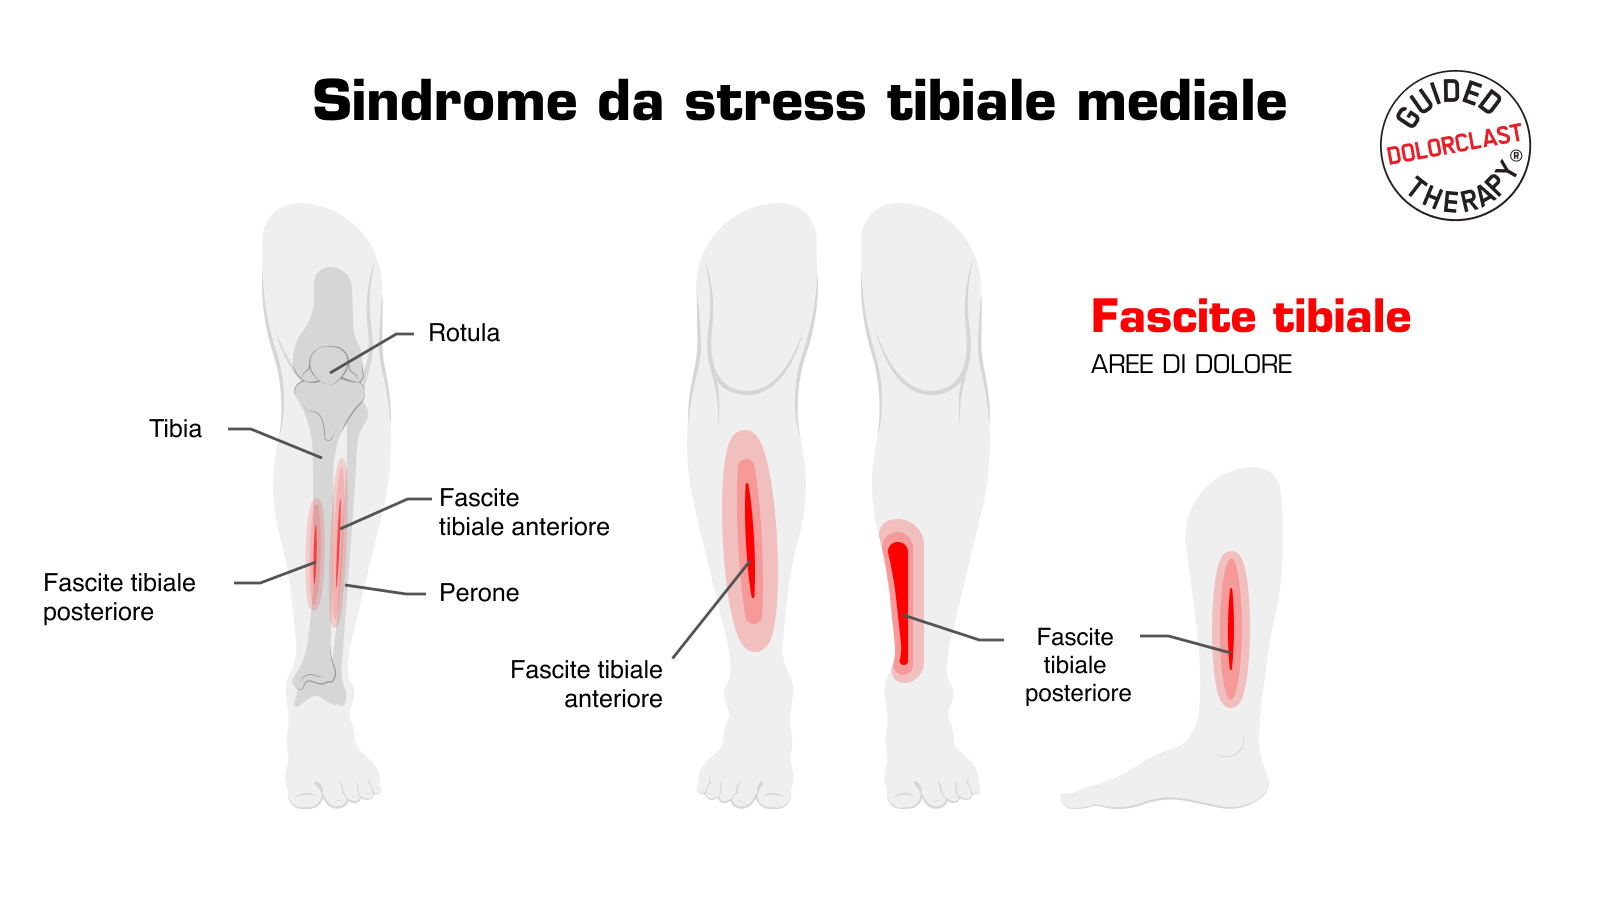 Sindrome da stress tibiale mediale